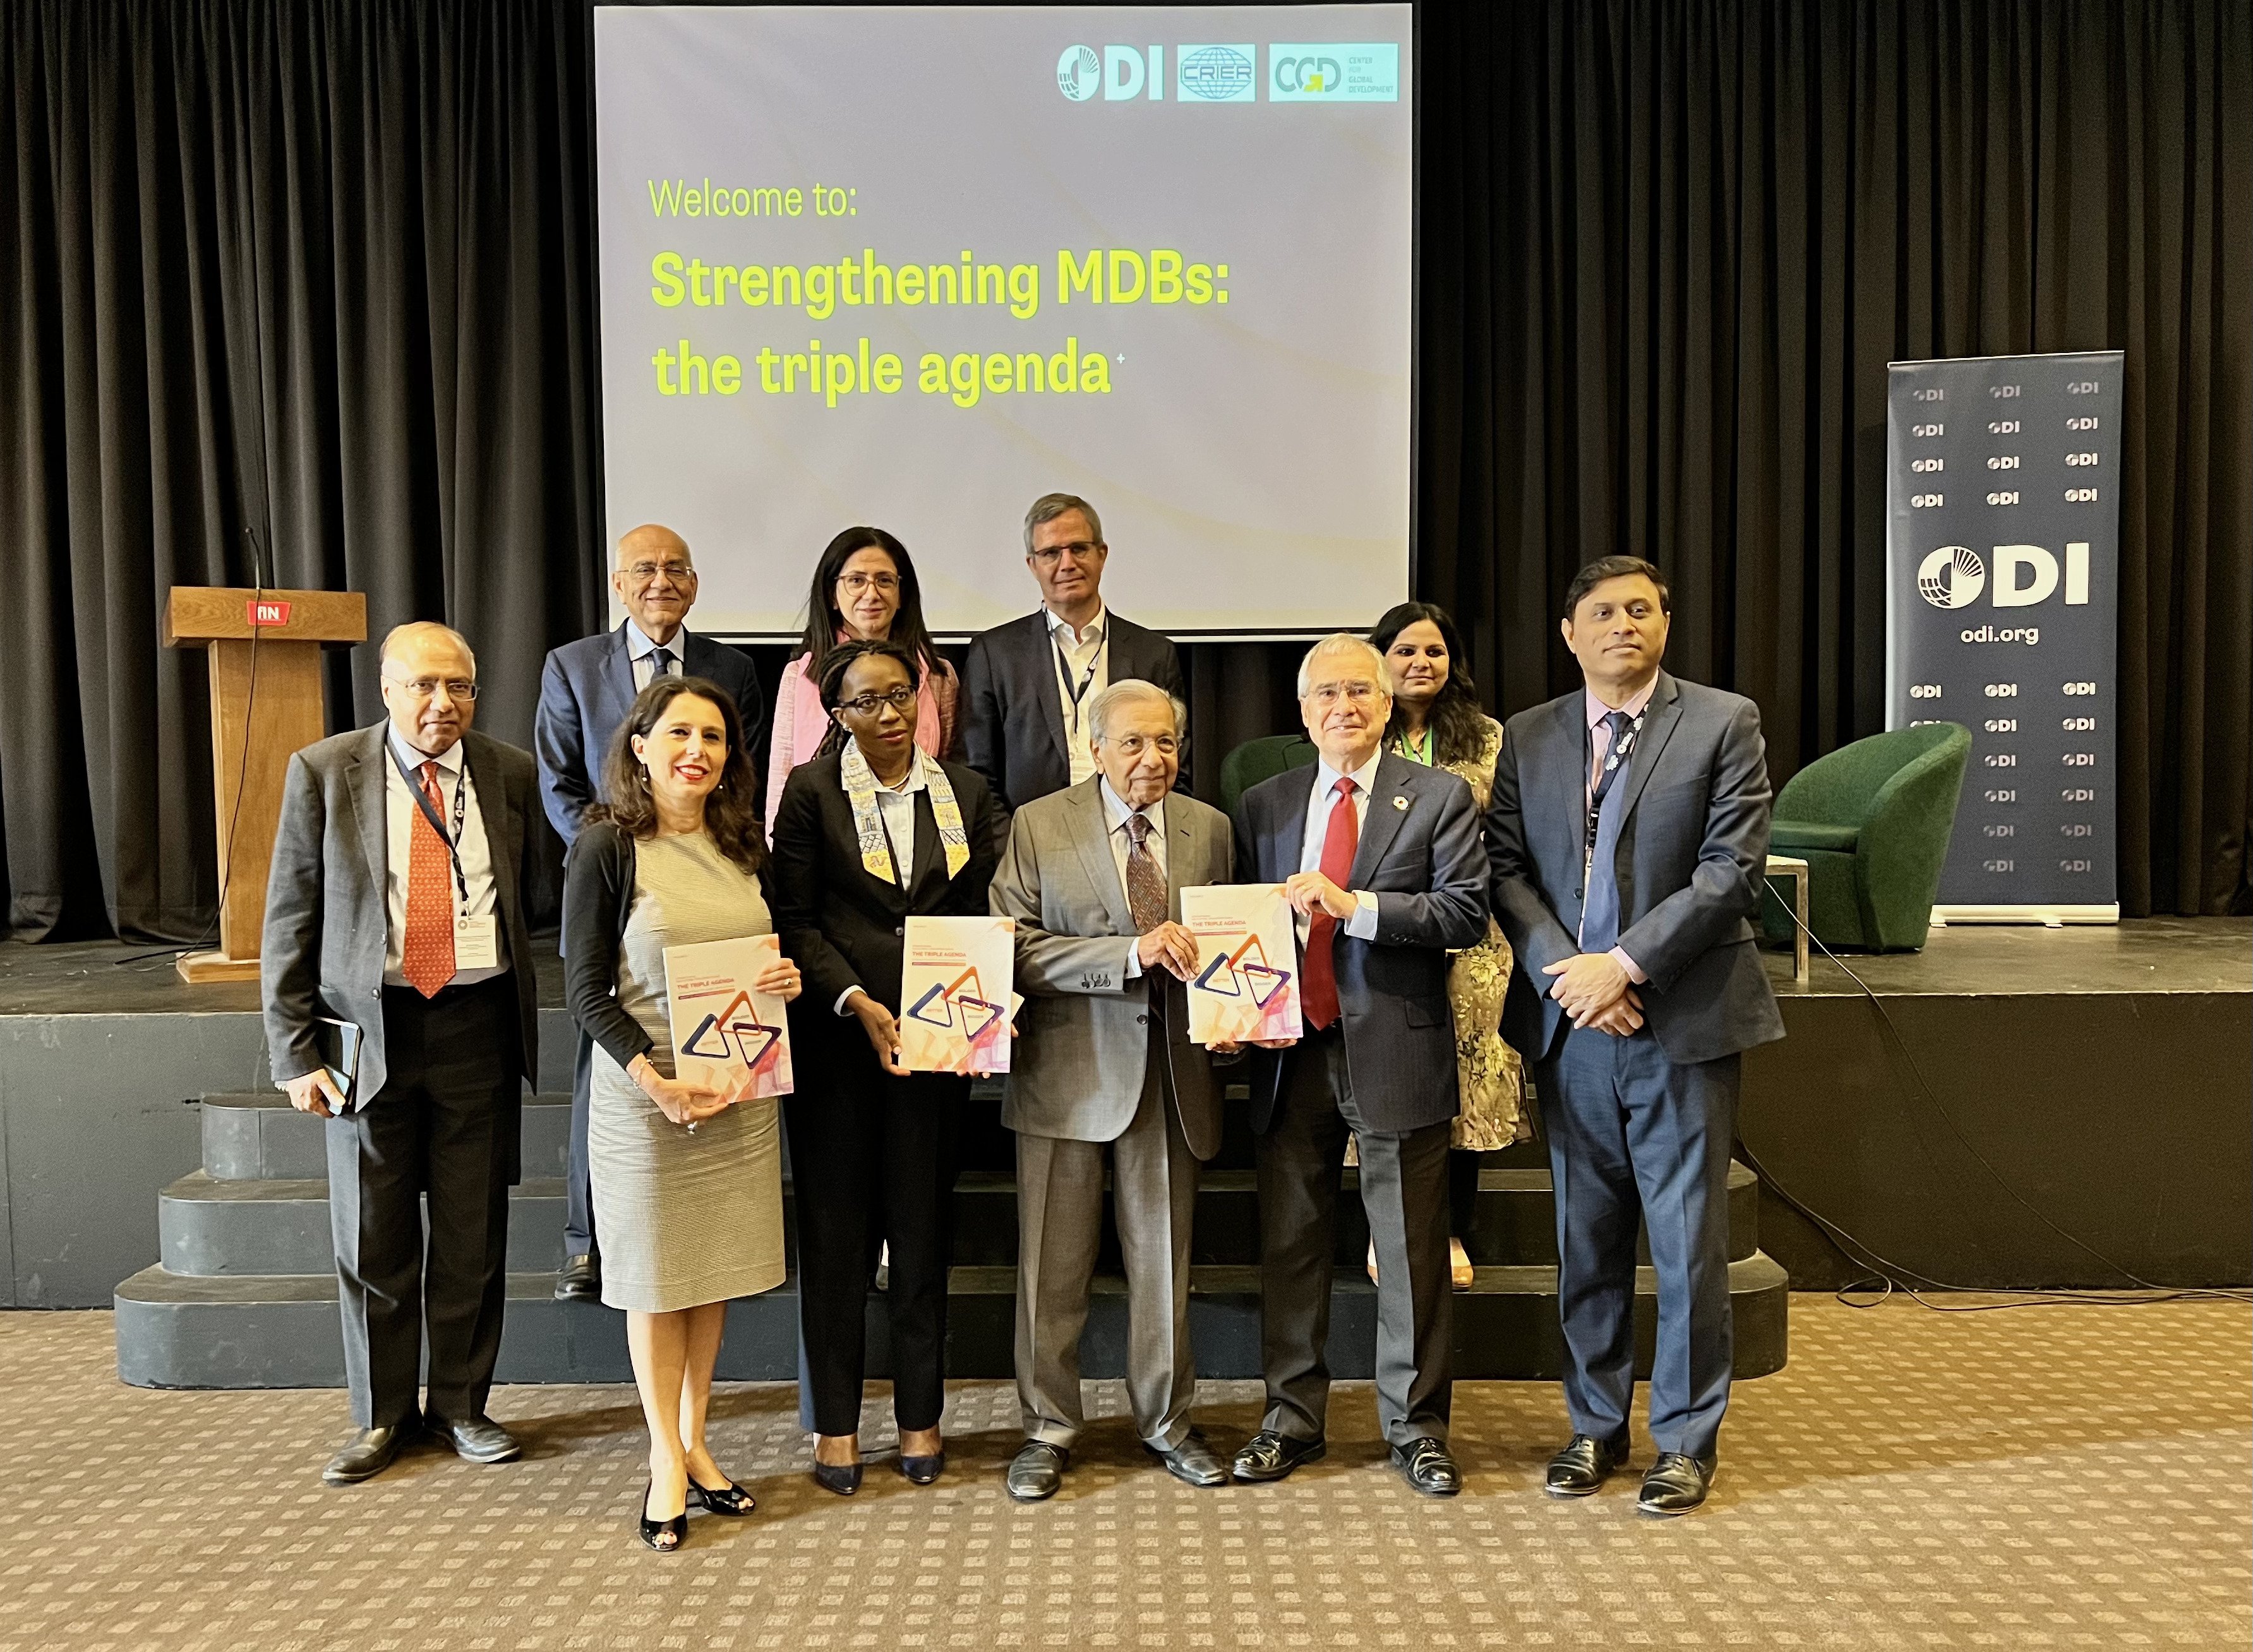 Strengthening MDBs - the triple agenda